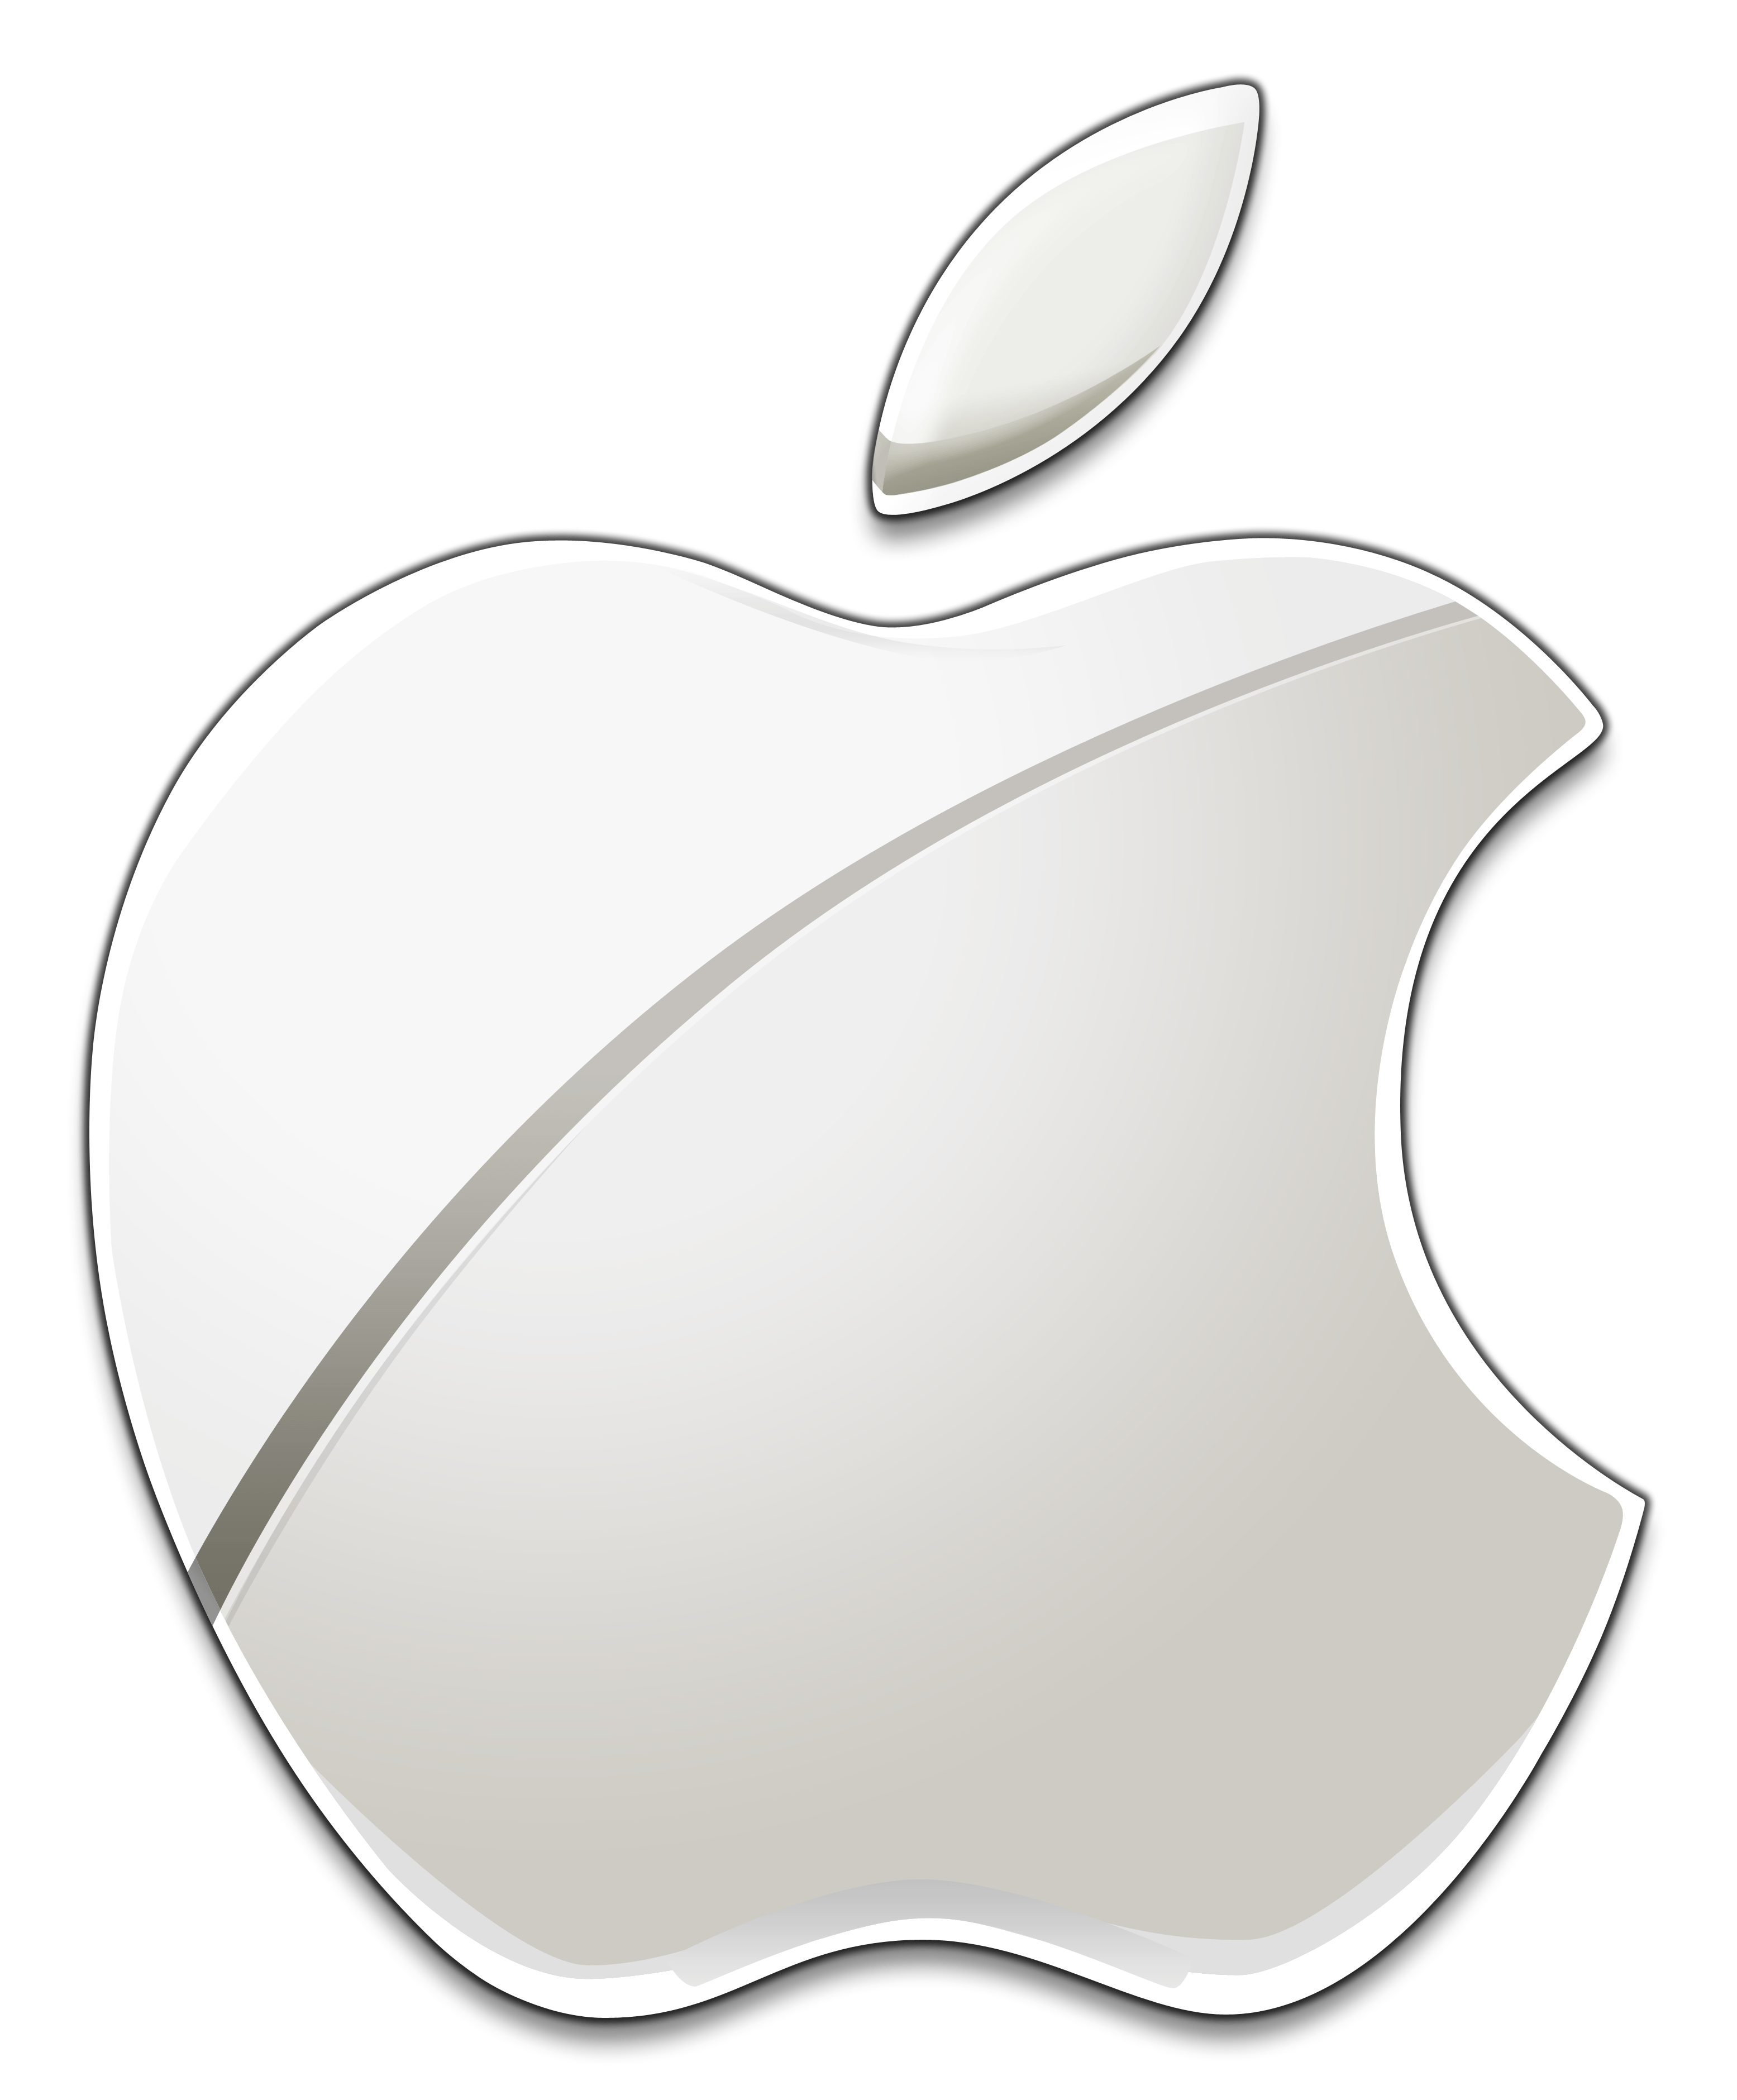 2015 Apple Logo - Free Apple Logo Outline, Download Free Clip Art, Free Clip Art on ...